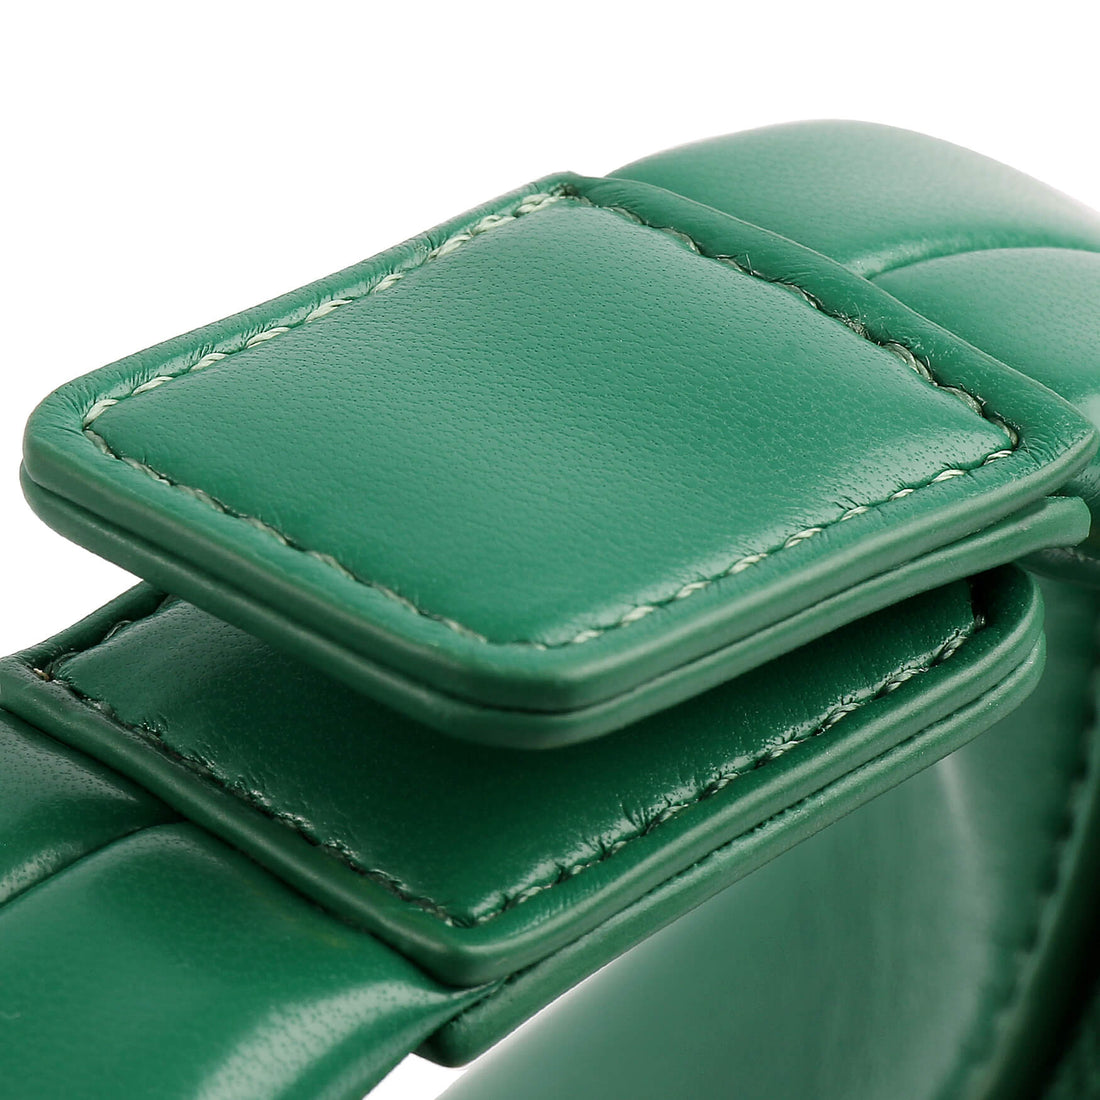 SINBONO Leather Purses and Handbags - Discount Leather Handbags